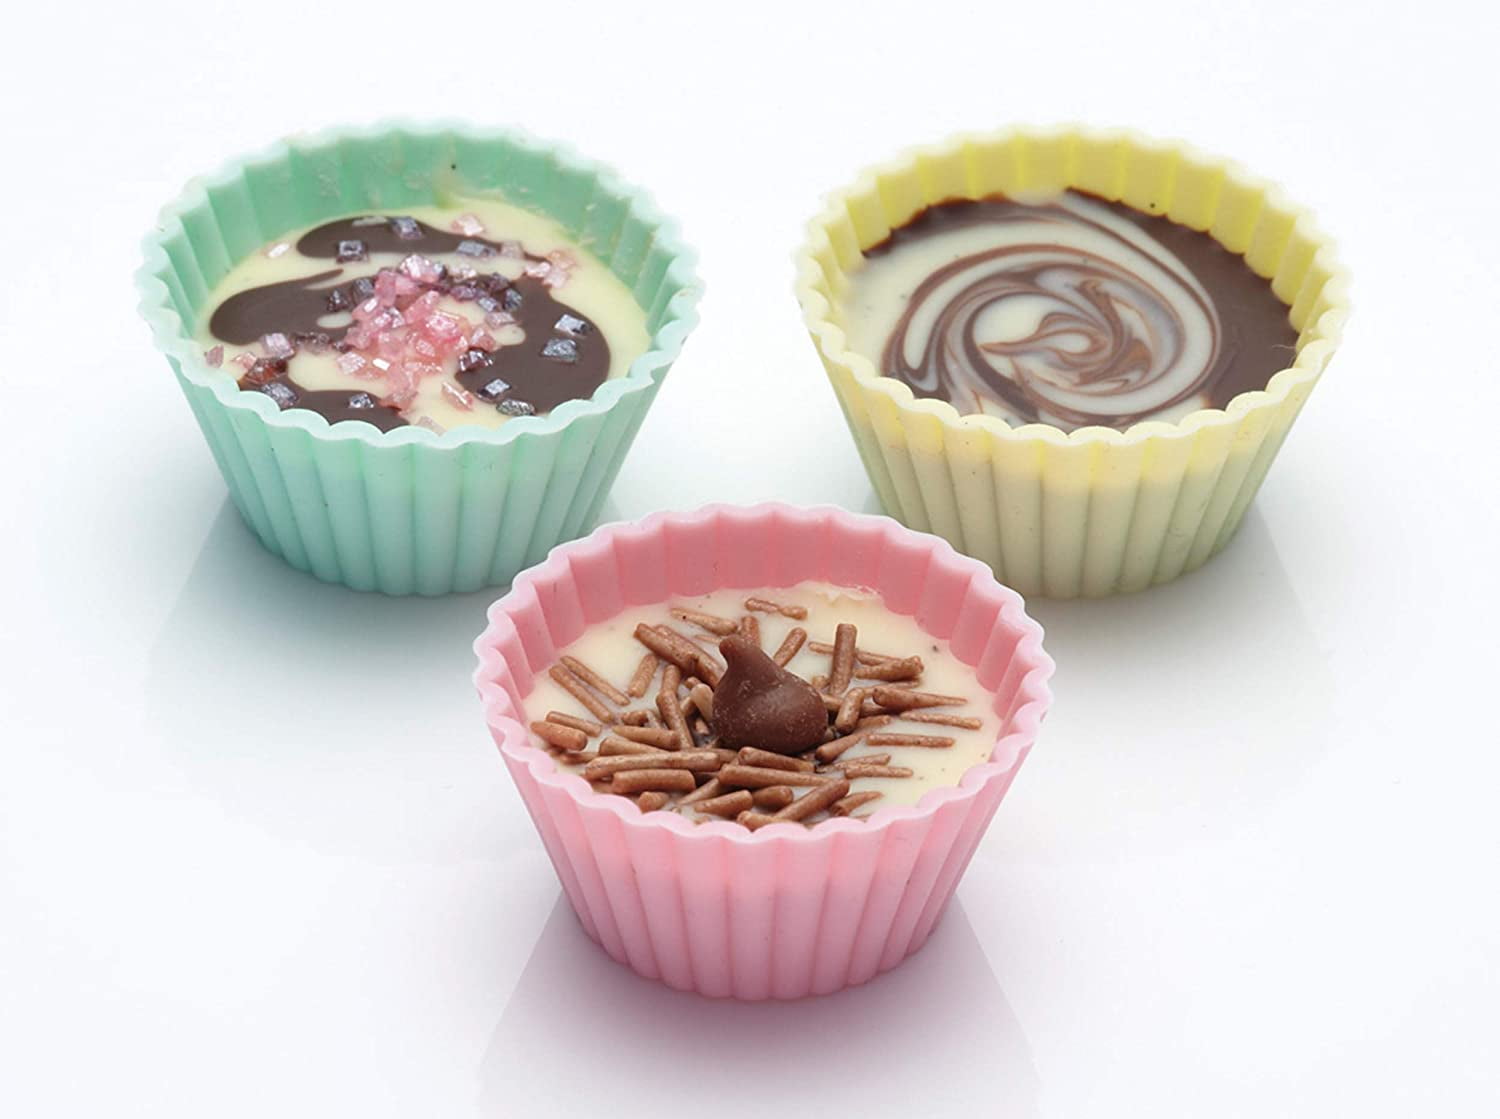 Magik 36 PCS Reusable Non-stick Silicone Mini Baking Muffin Cupcake Chocolate Cups Rose